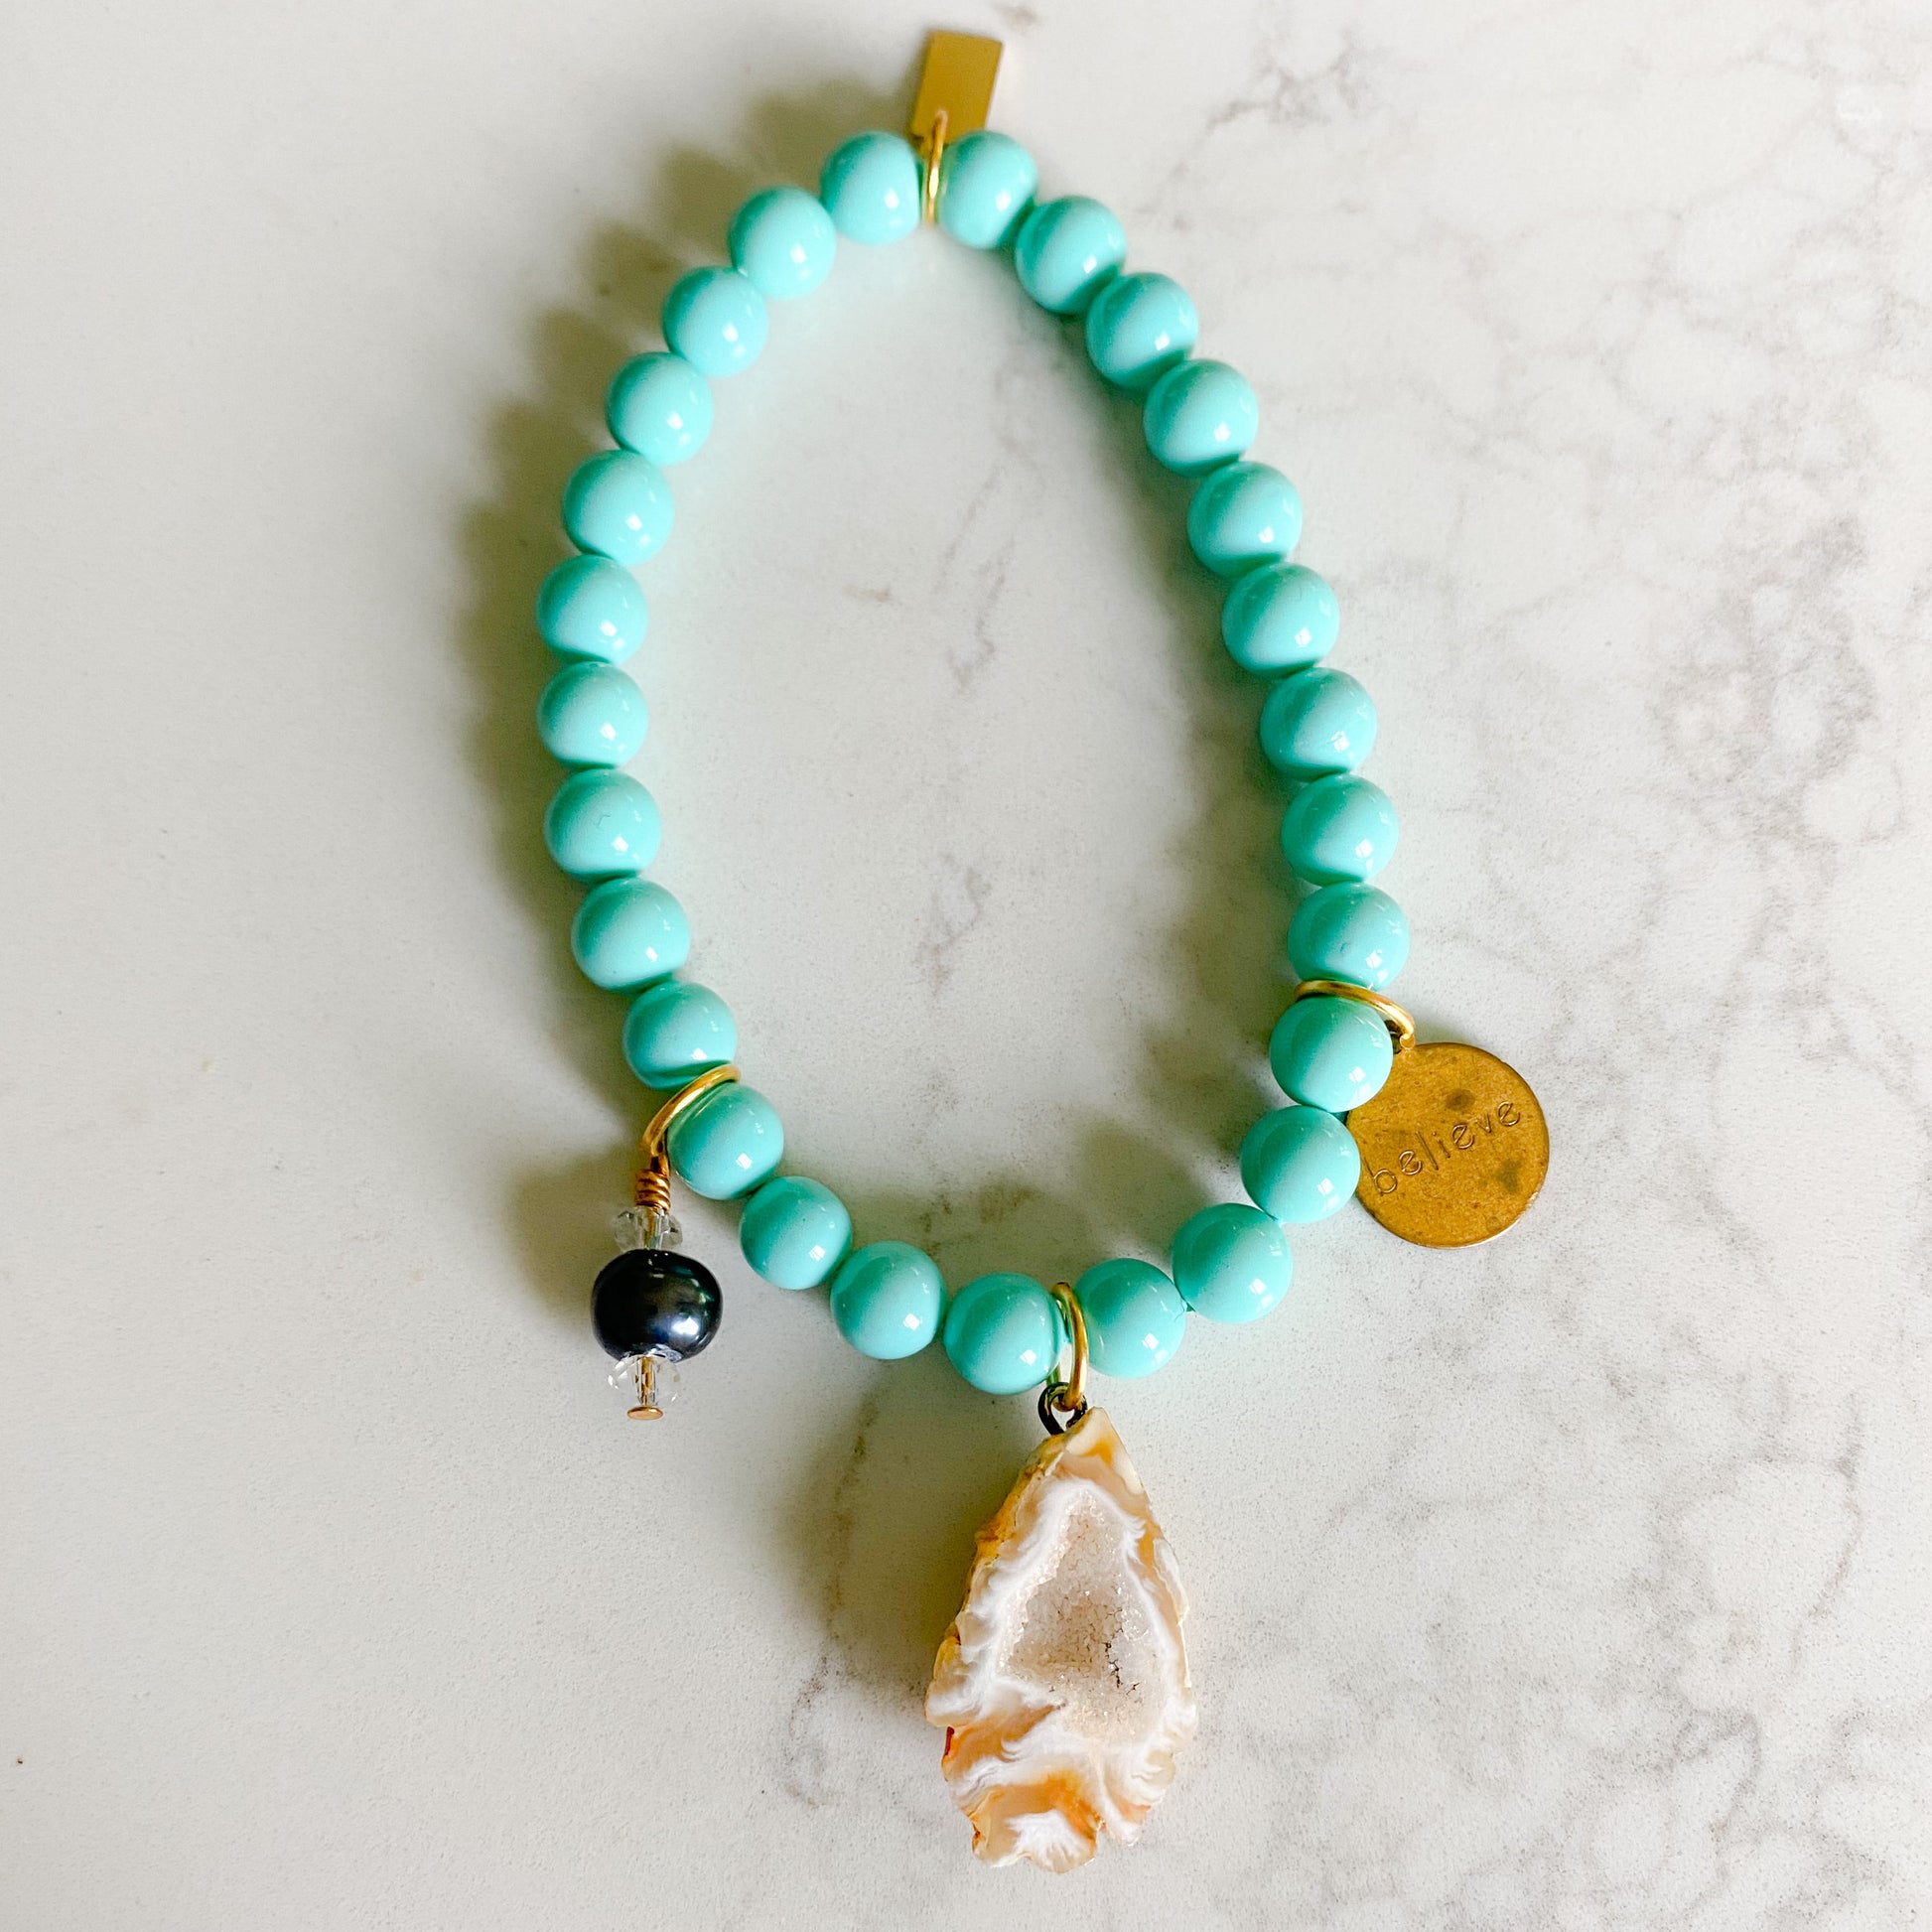 Palm Springs Bracelet - BelleStyle turquoise druzy quartz freshwater pearl